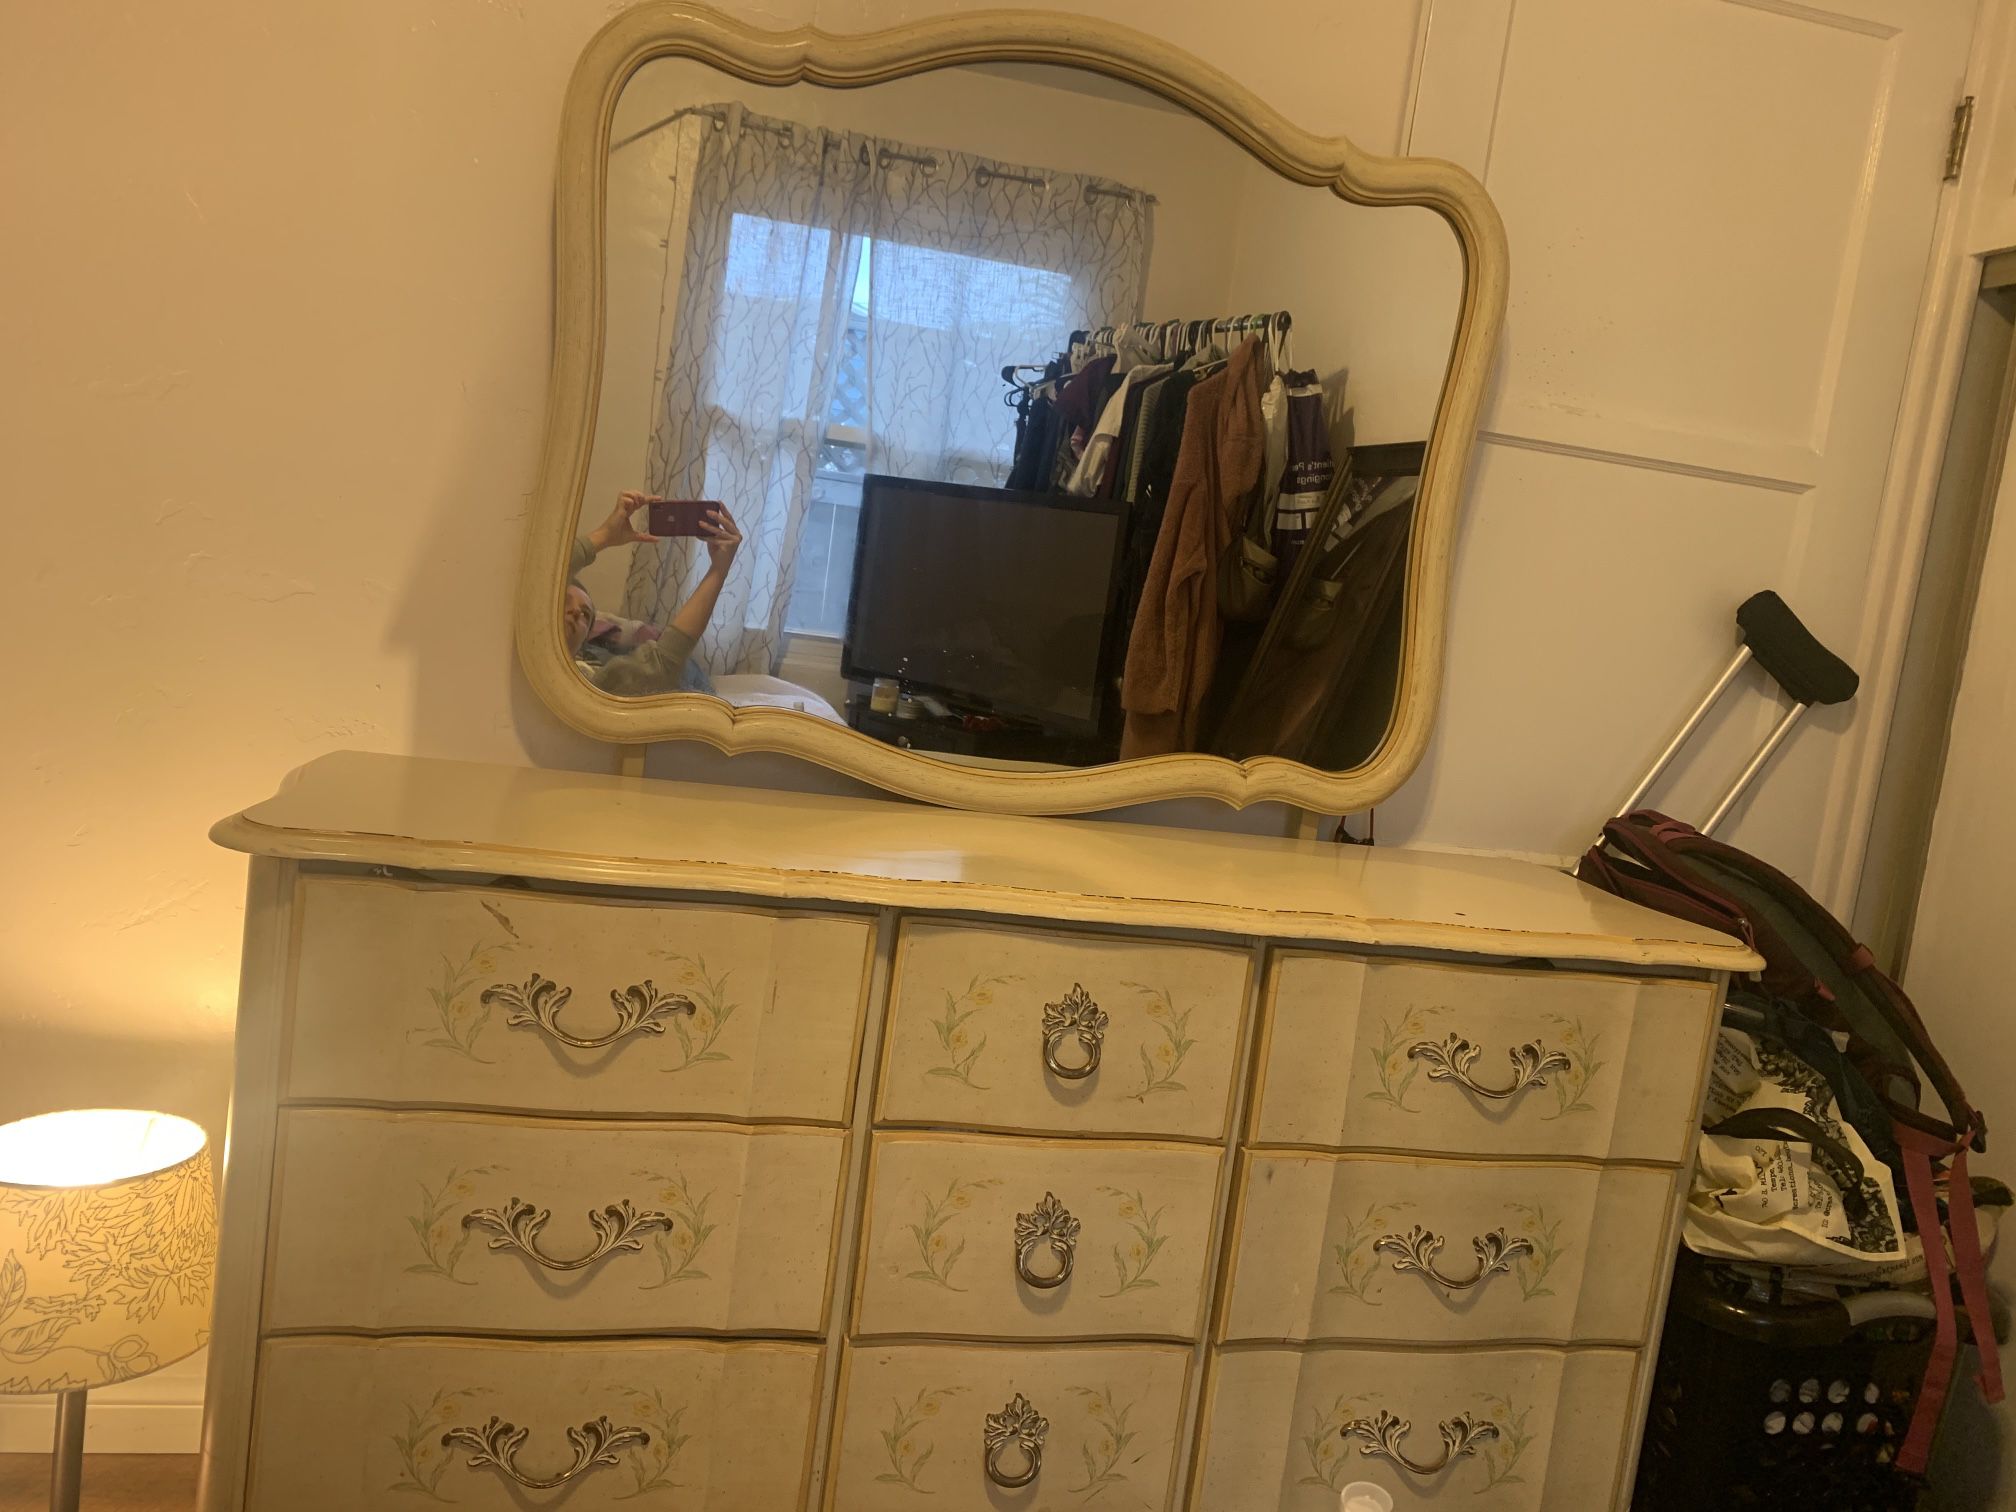 French Provincial Dresser & Mirror